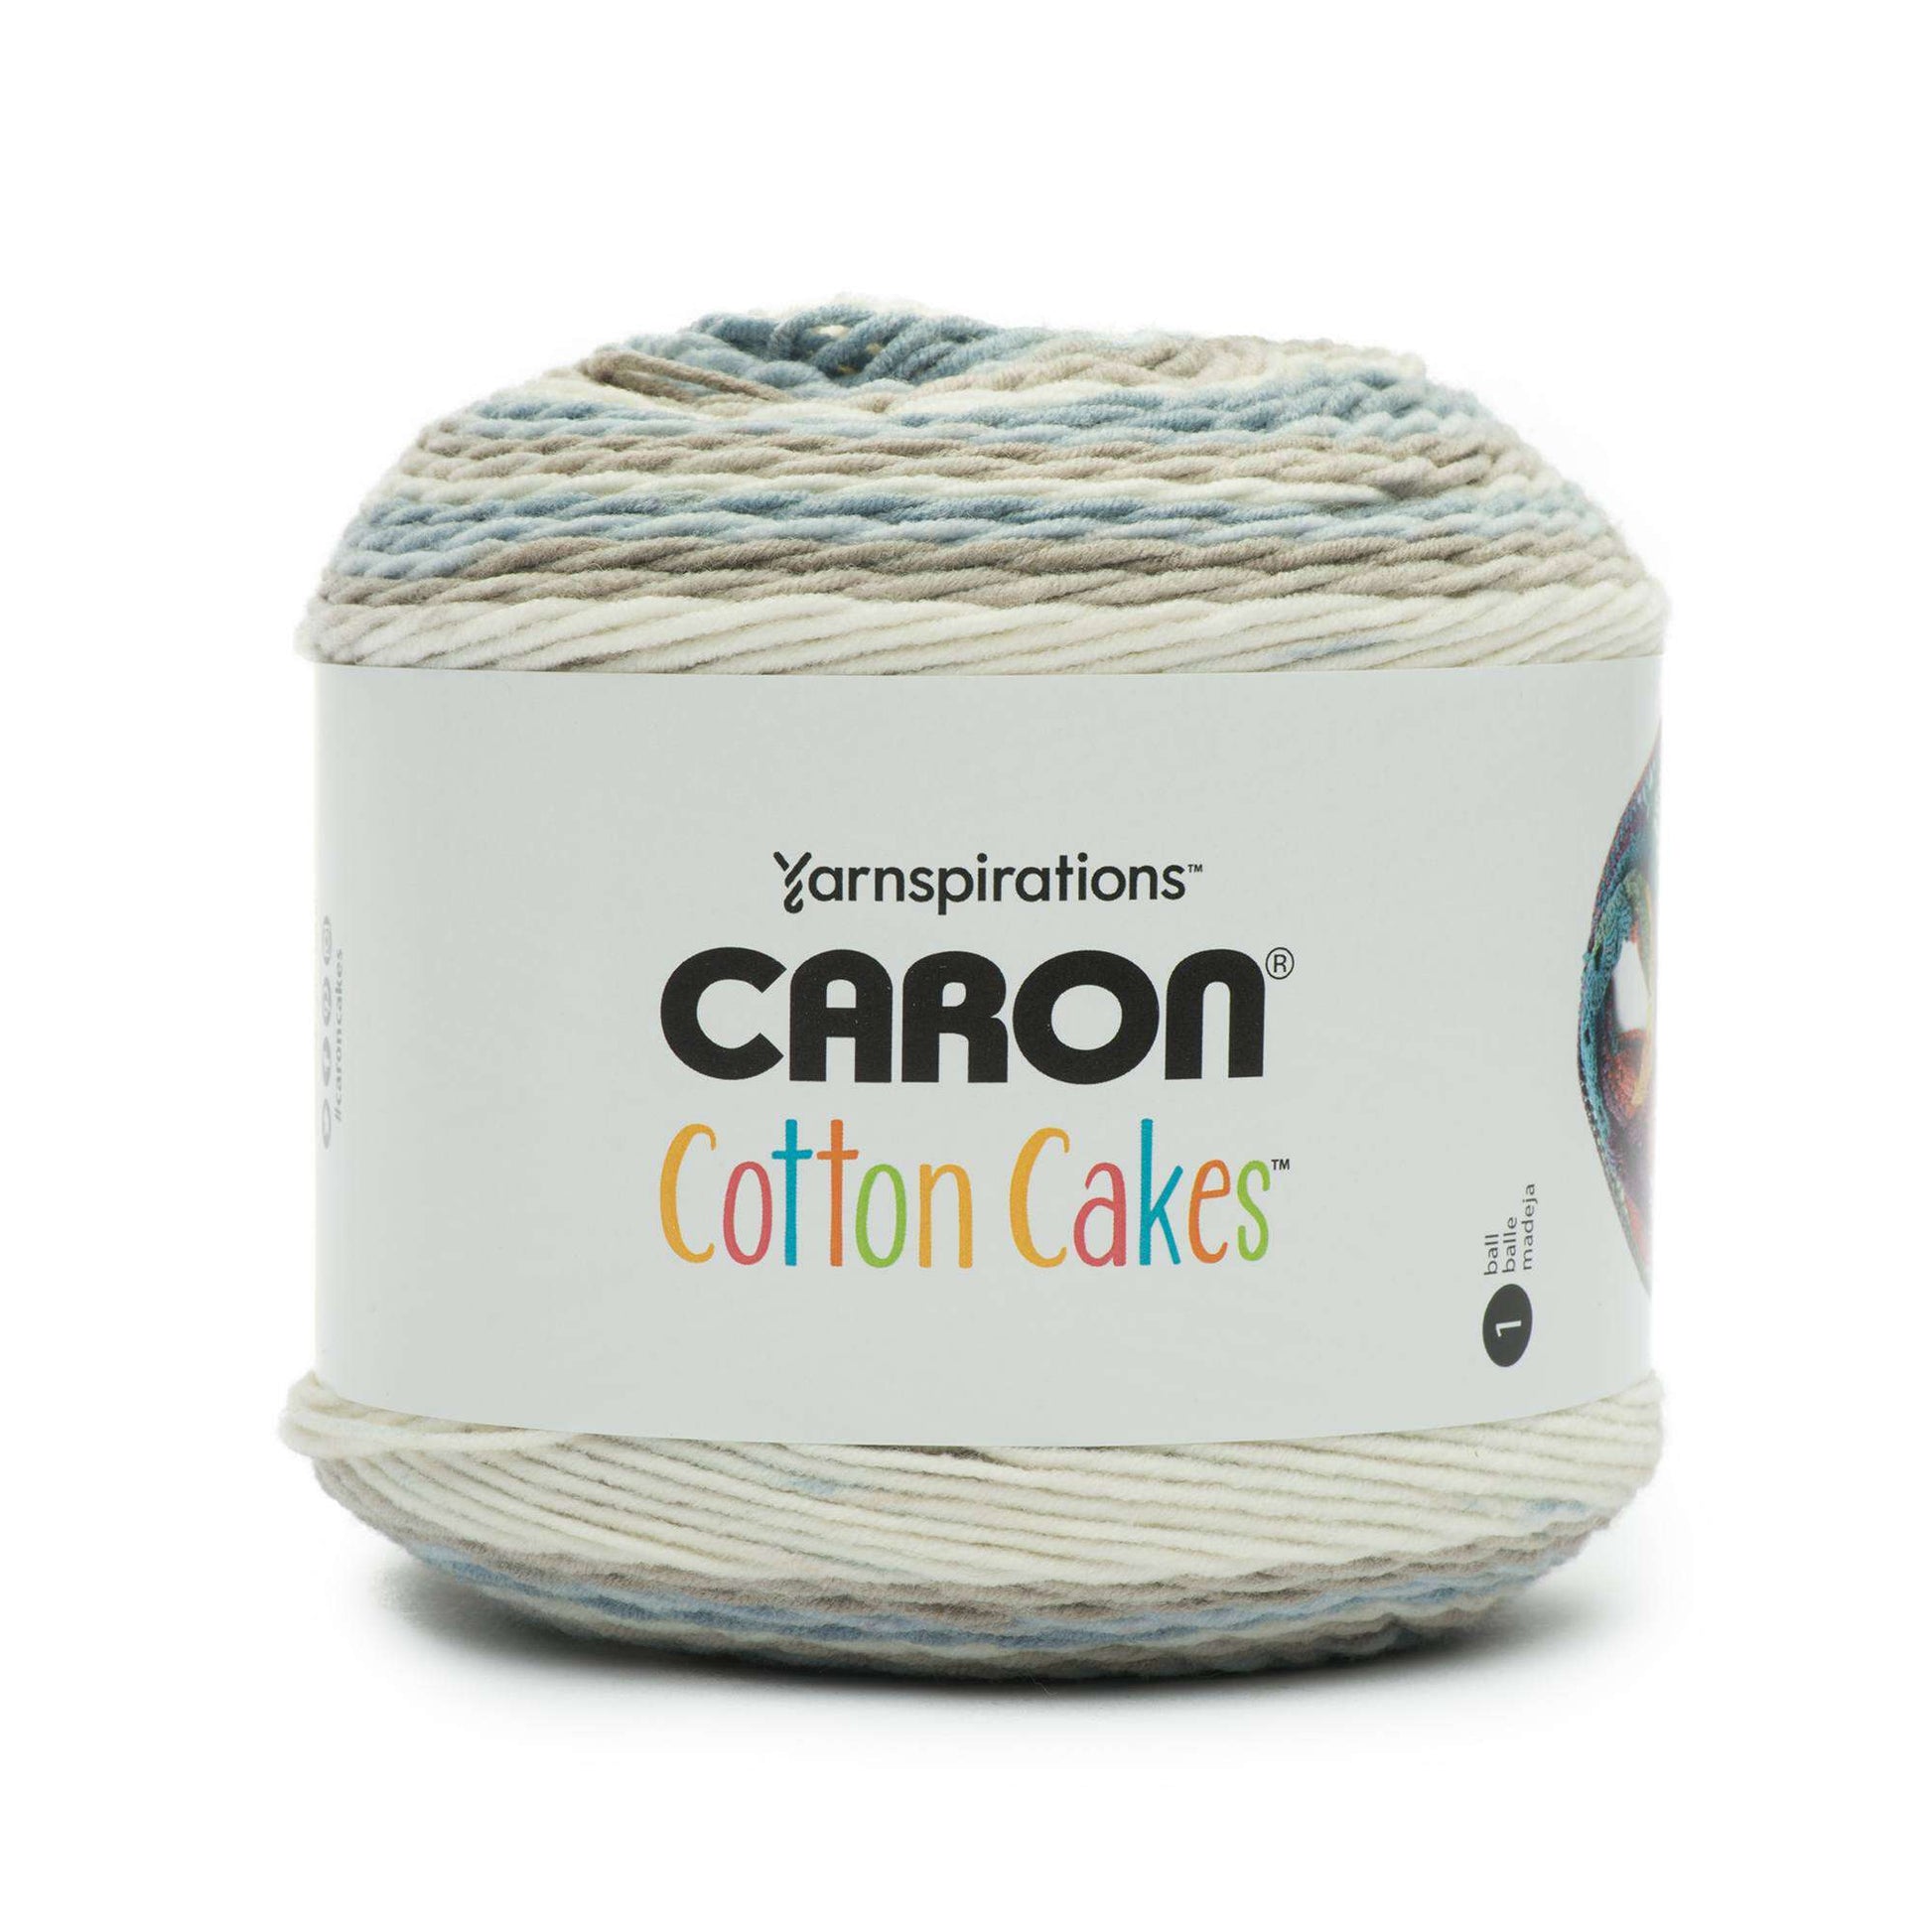 Caron Cotton Cakes Yarn (250g/8.8oz) - Discontinued shades